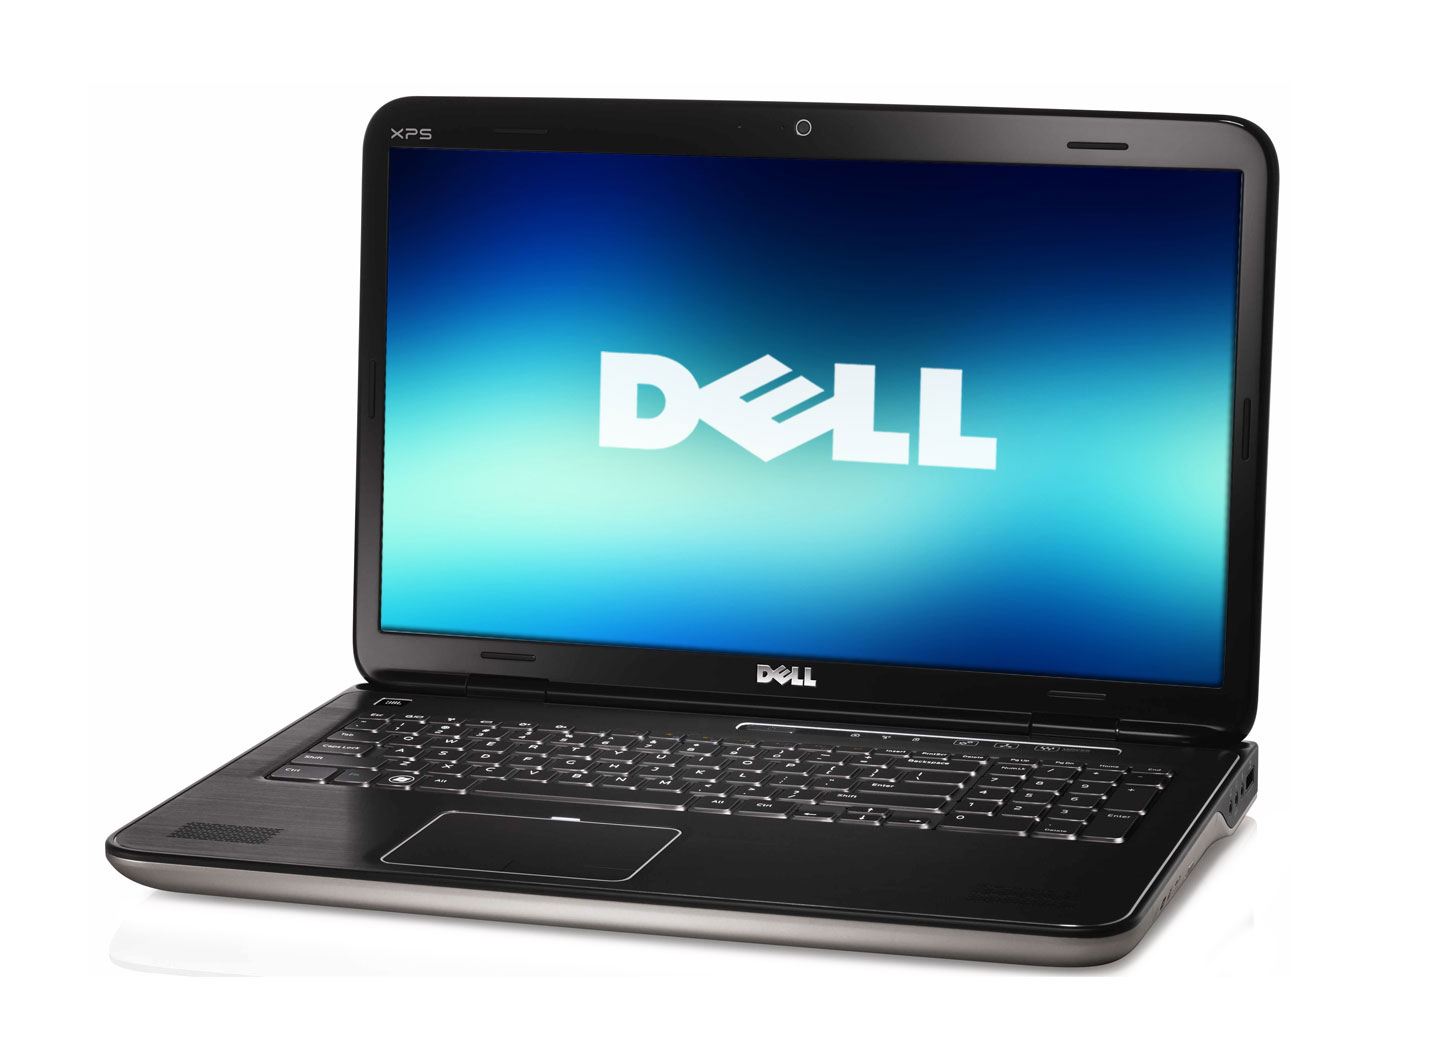 Harga dan Spesifikasi Laptop Dell Inspiron XPS 2013 | Kumpulan Gambar Handphone Laptop Harga Hp